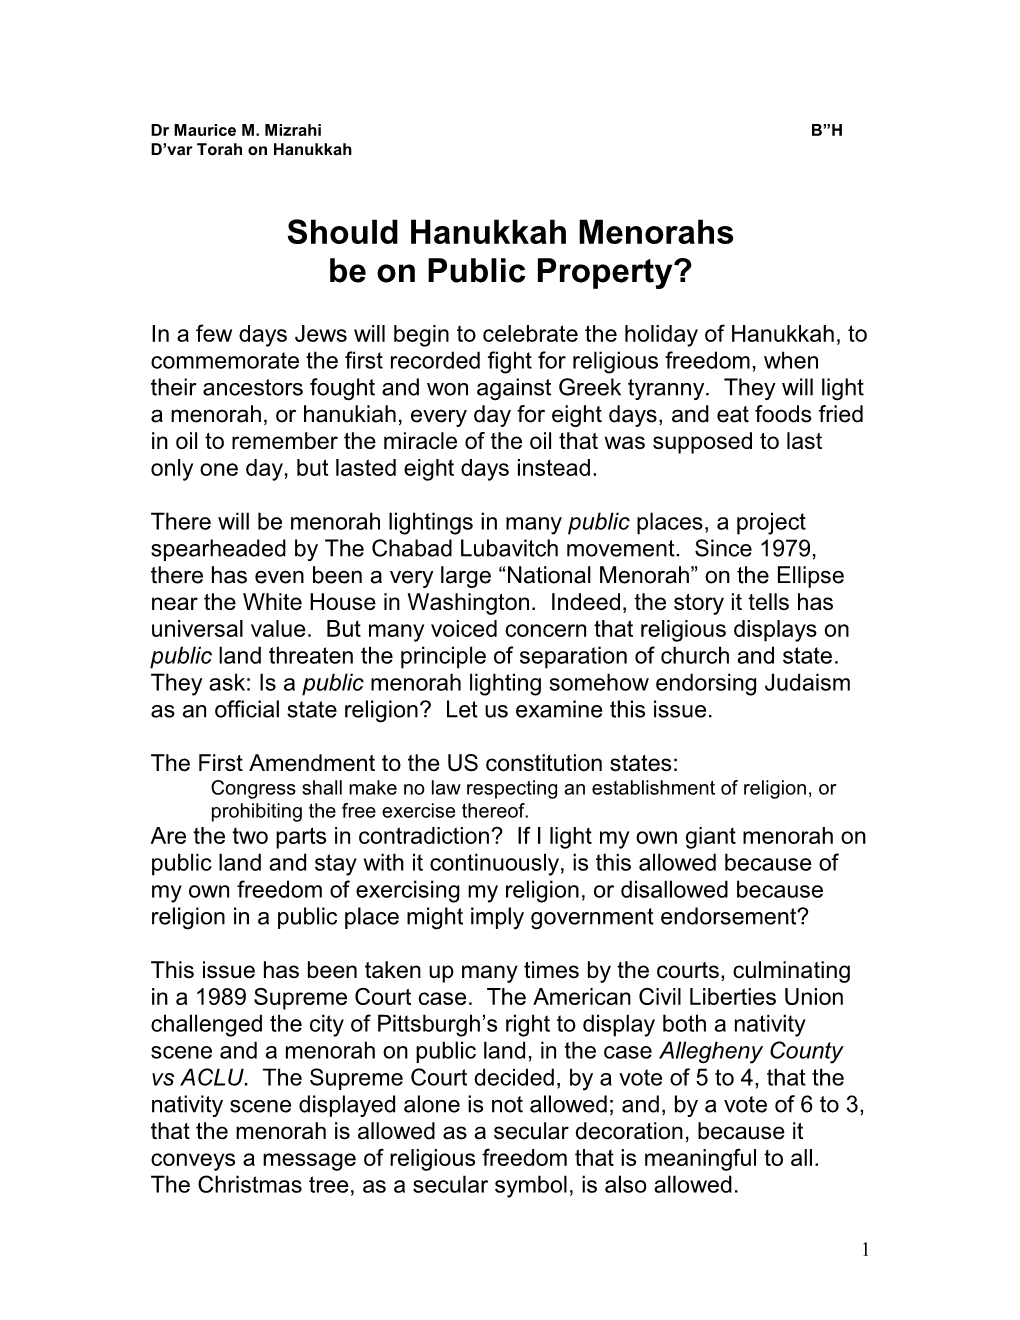 Should Hanukkah Menorahs Be on Public Property?